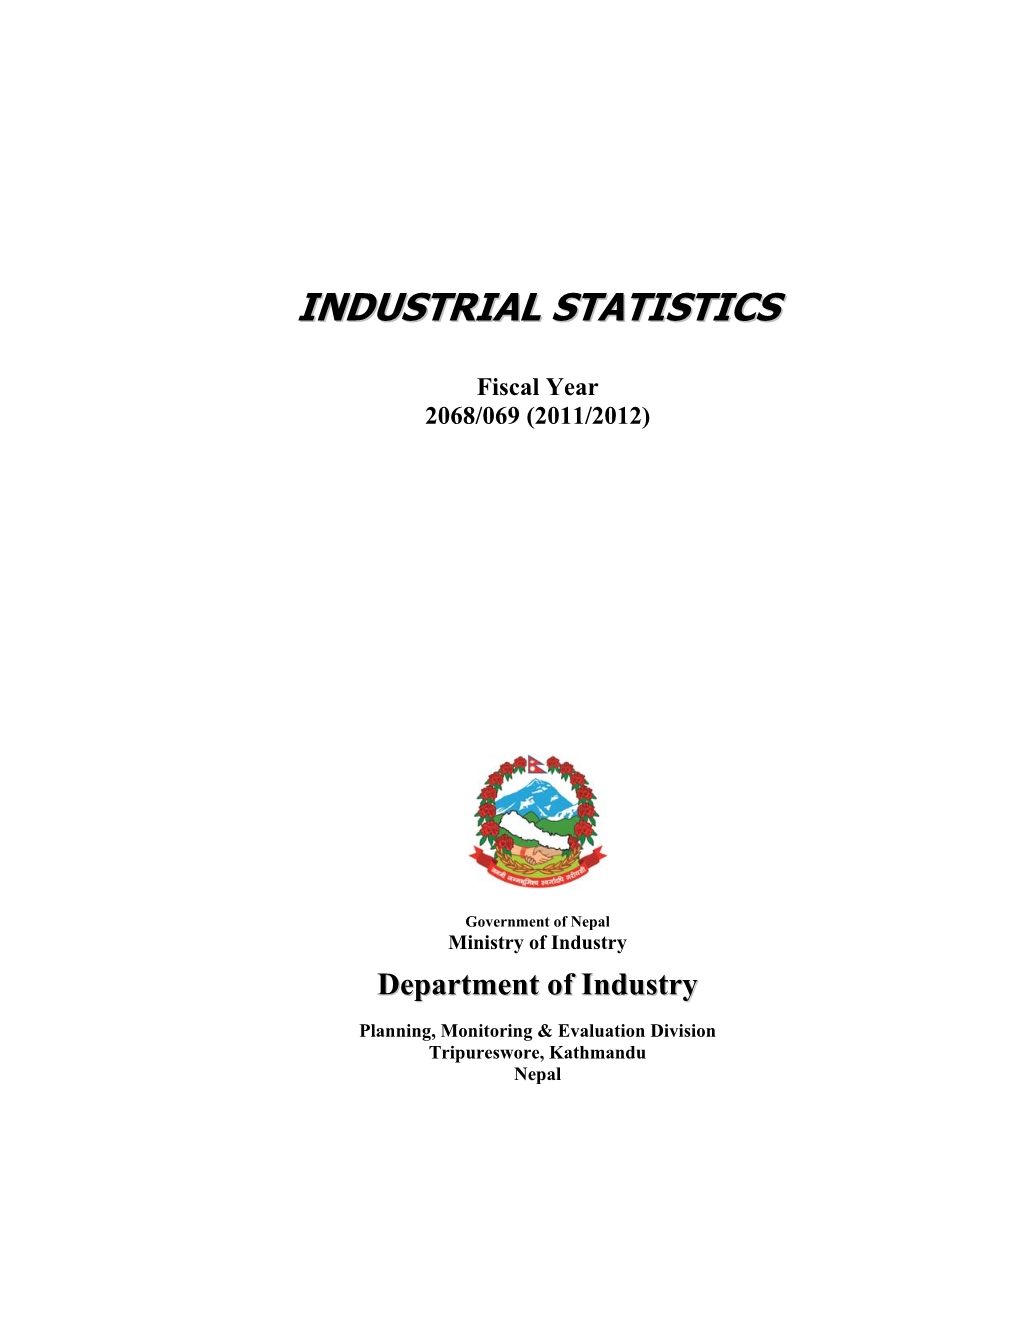 Industrial Statistics 2068-69